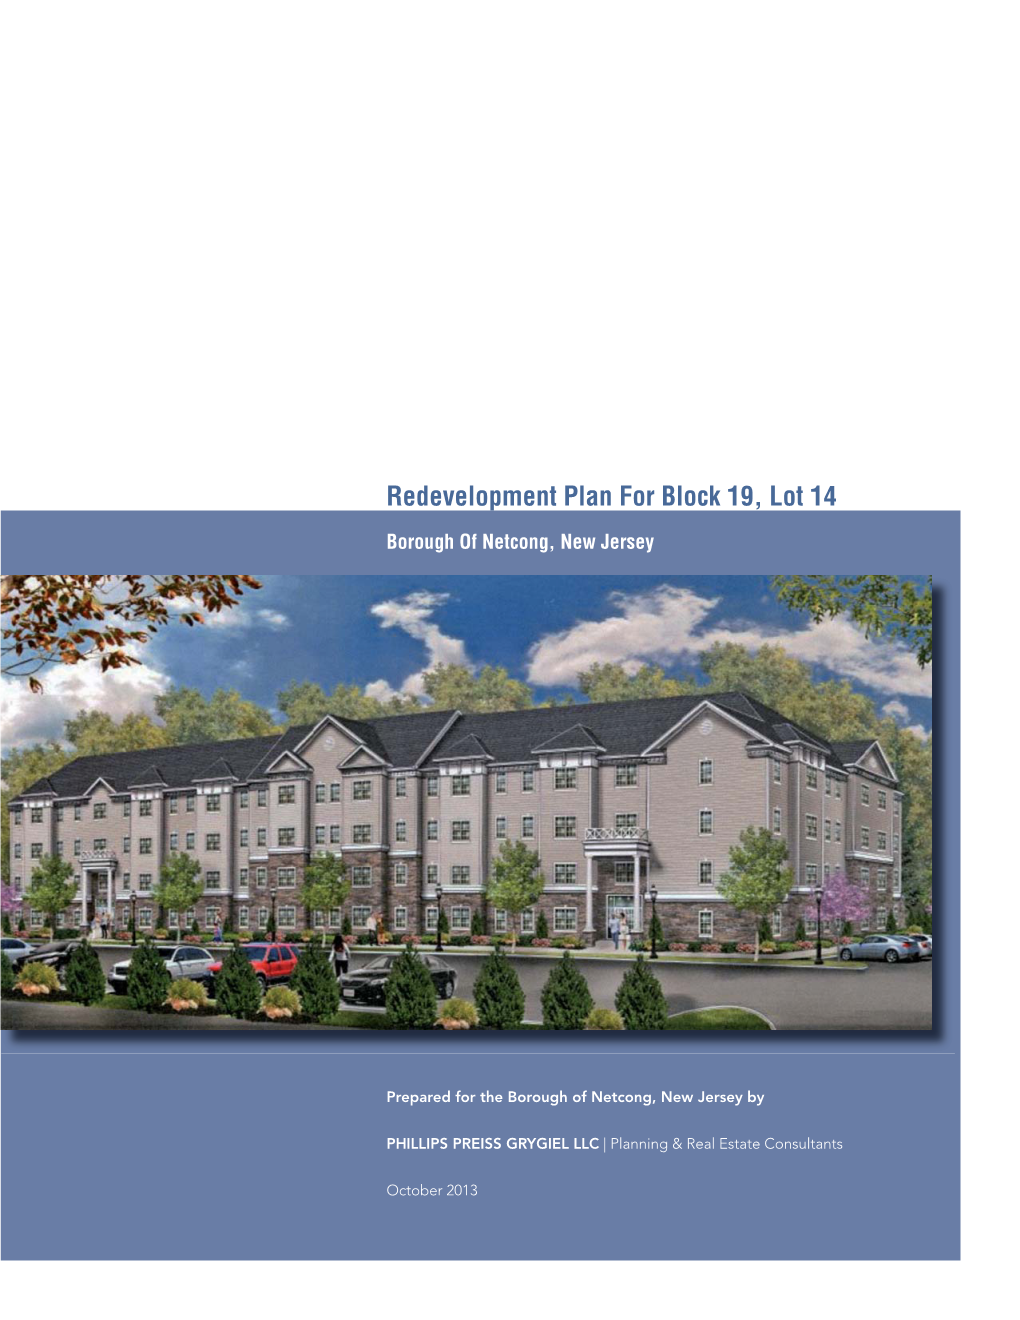 Redevelopment Plan for Block 19, Lot 14